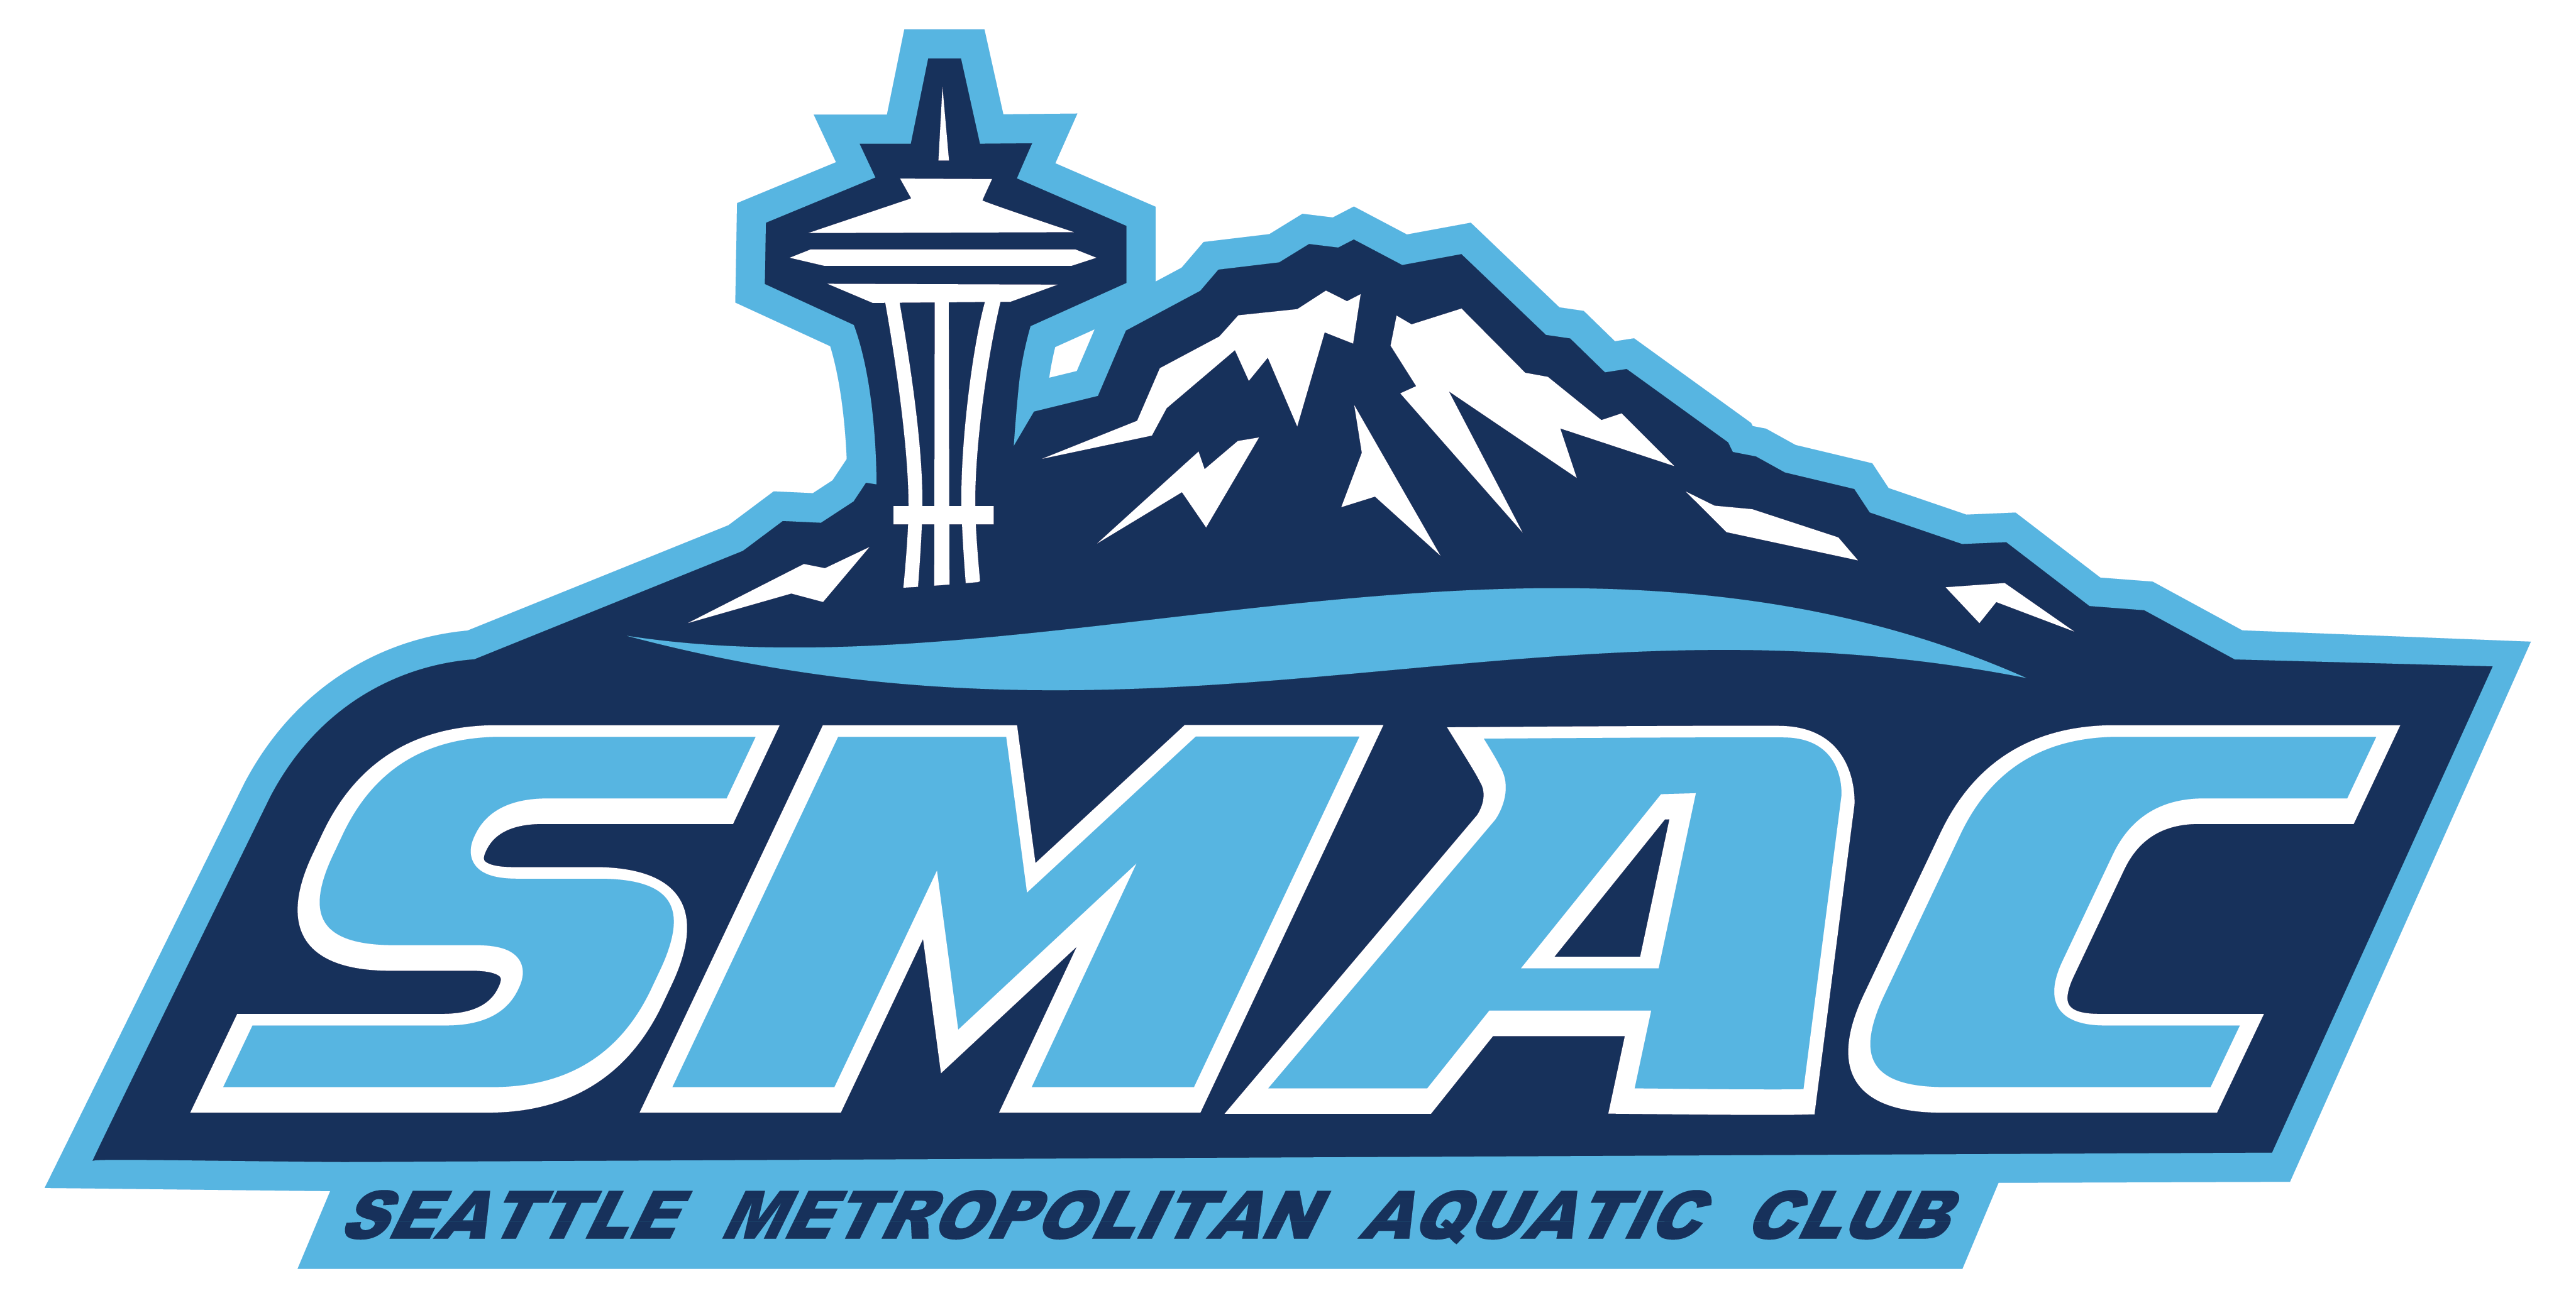 Seattle Metropolitan Aquatic Club